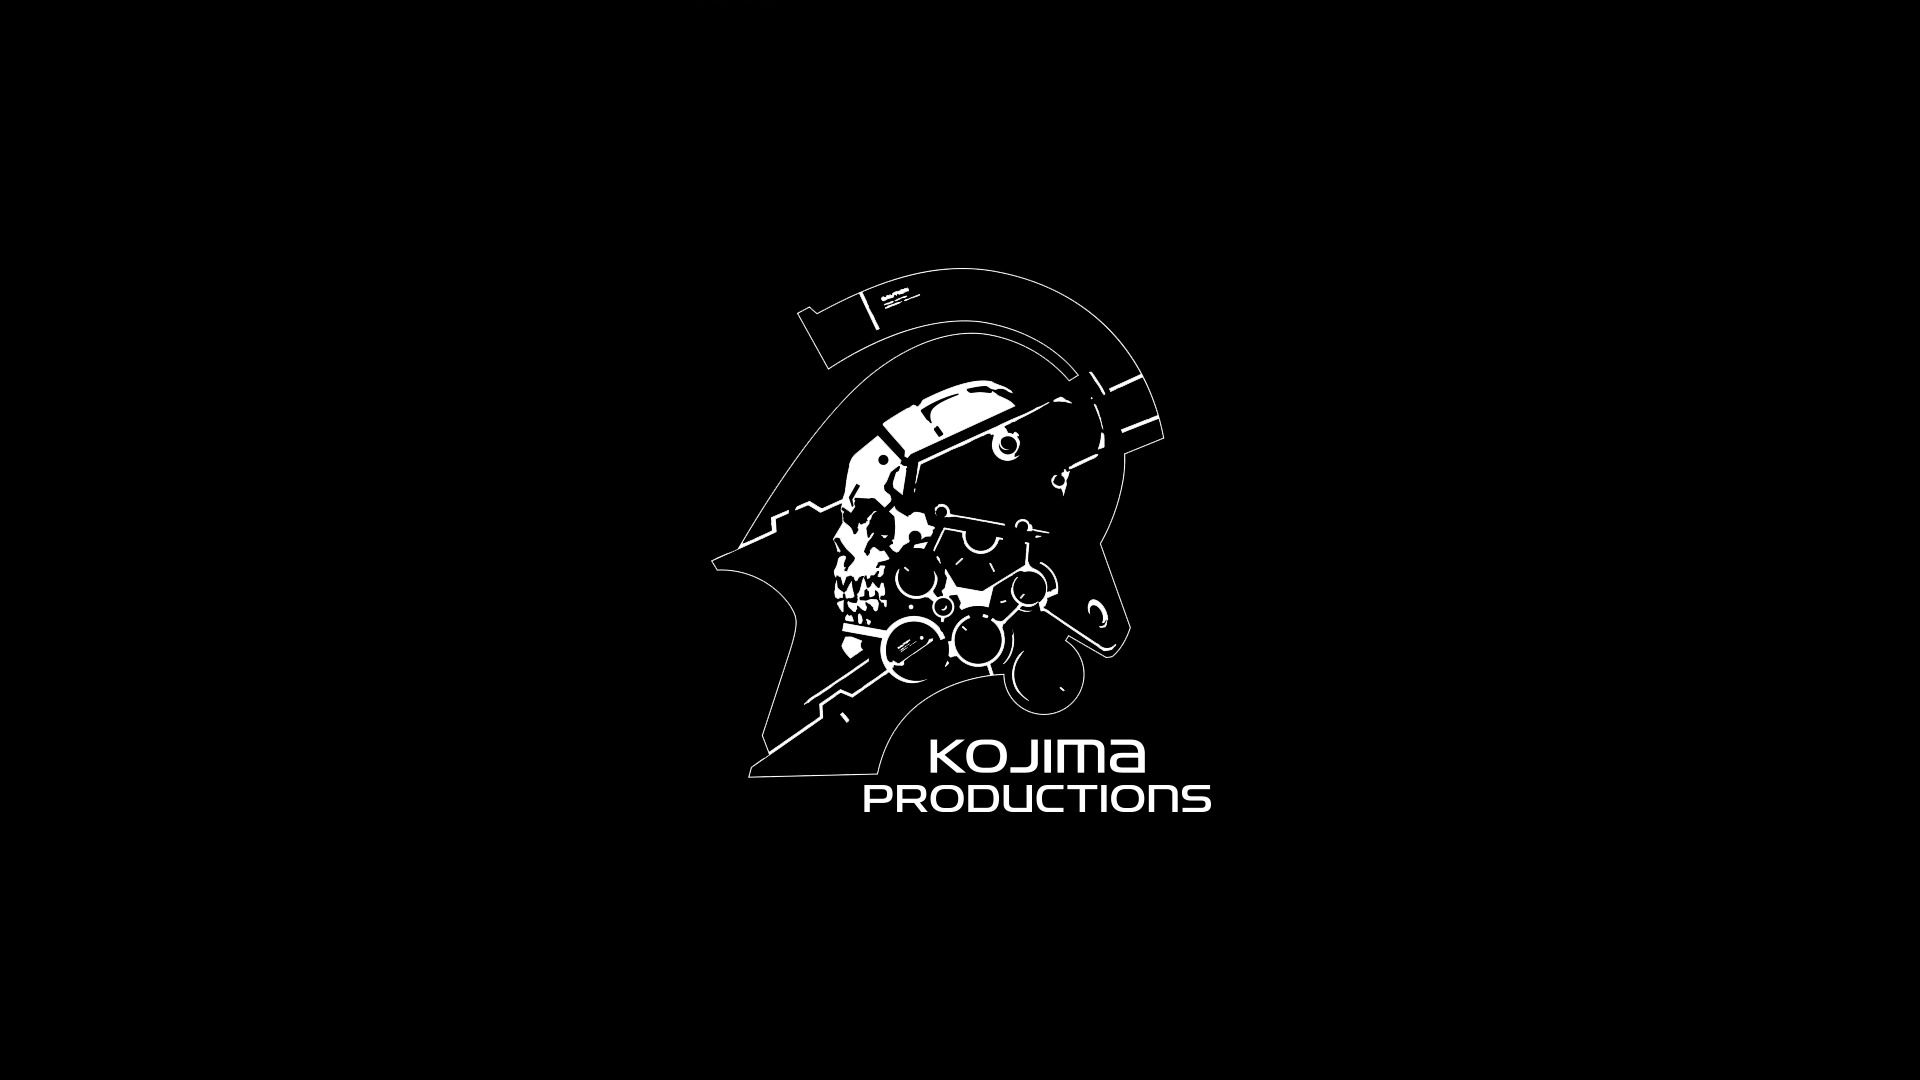 Metal Gear Solid, Hideo Kojima, Kojima Productions Wallpaper HD / Desktop and Mobile Background